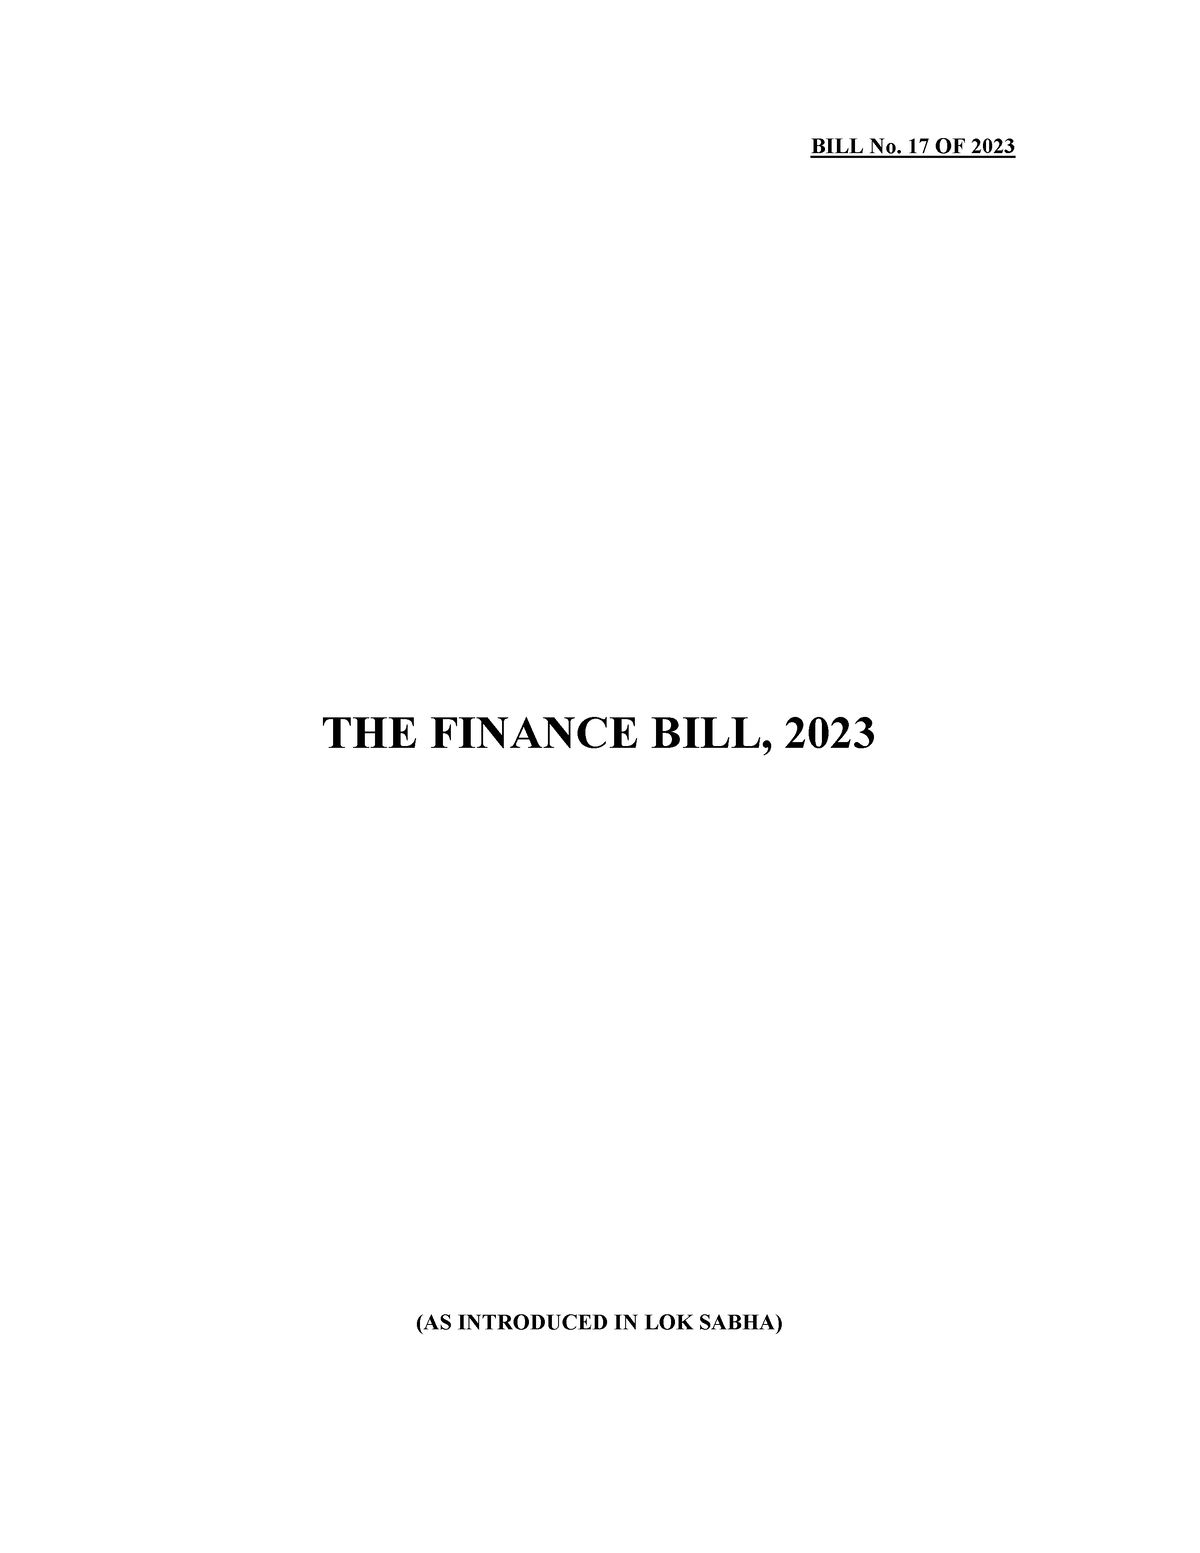 Finance Bill Financial bill BILL No. 17 OF 2023 THE FINANCE BILL